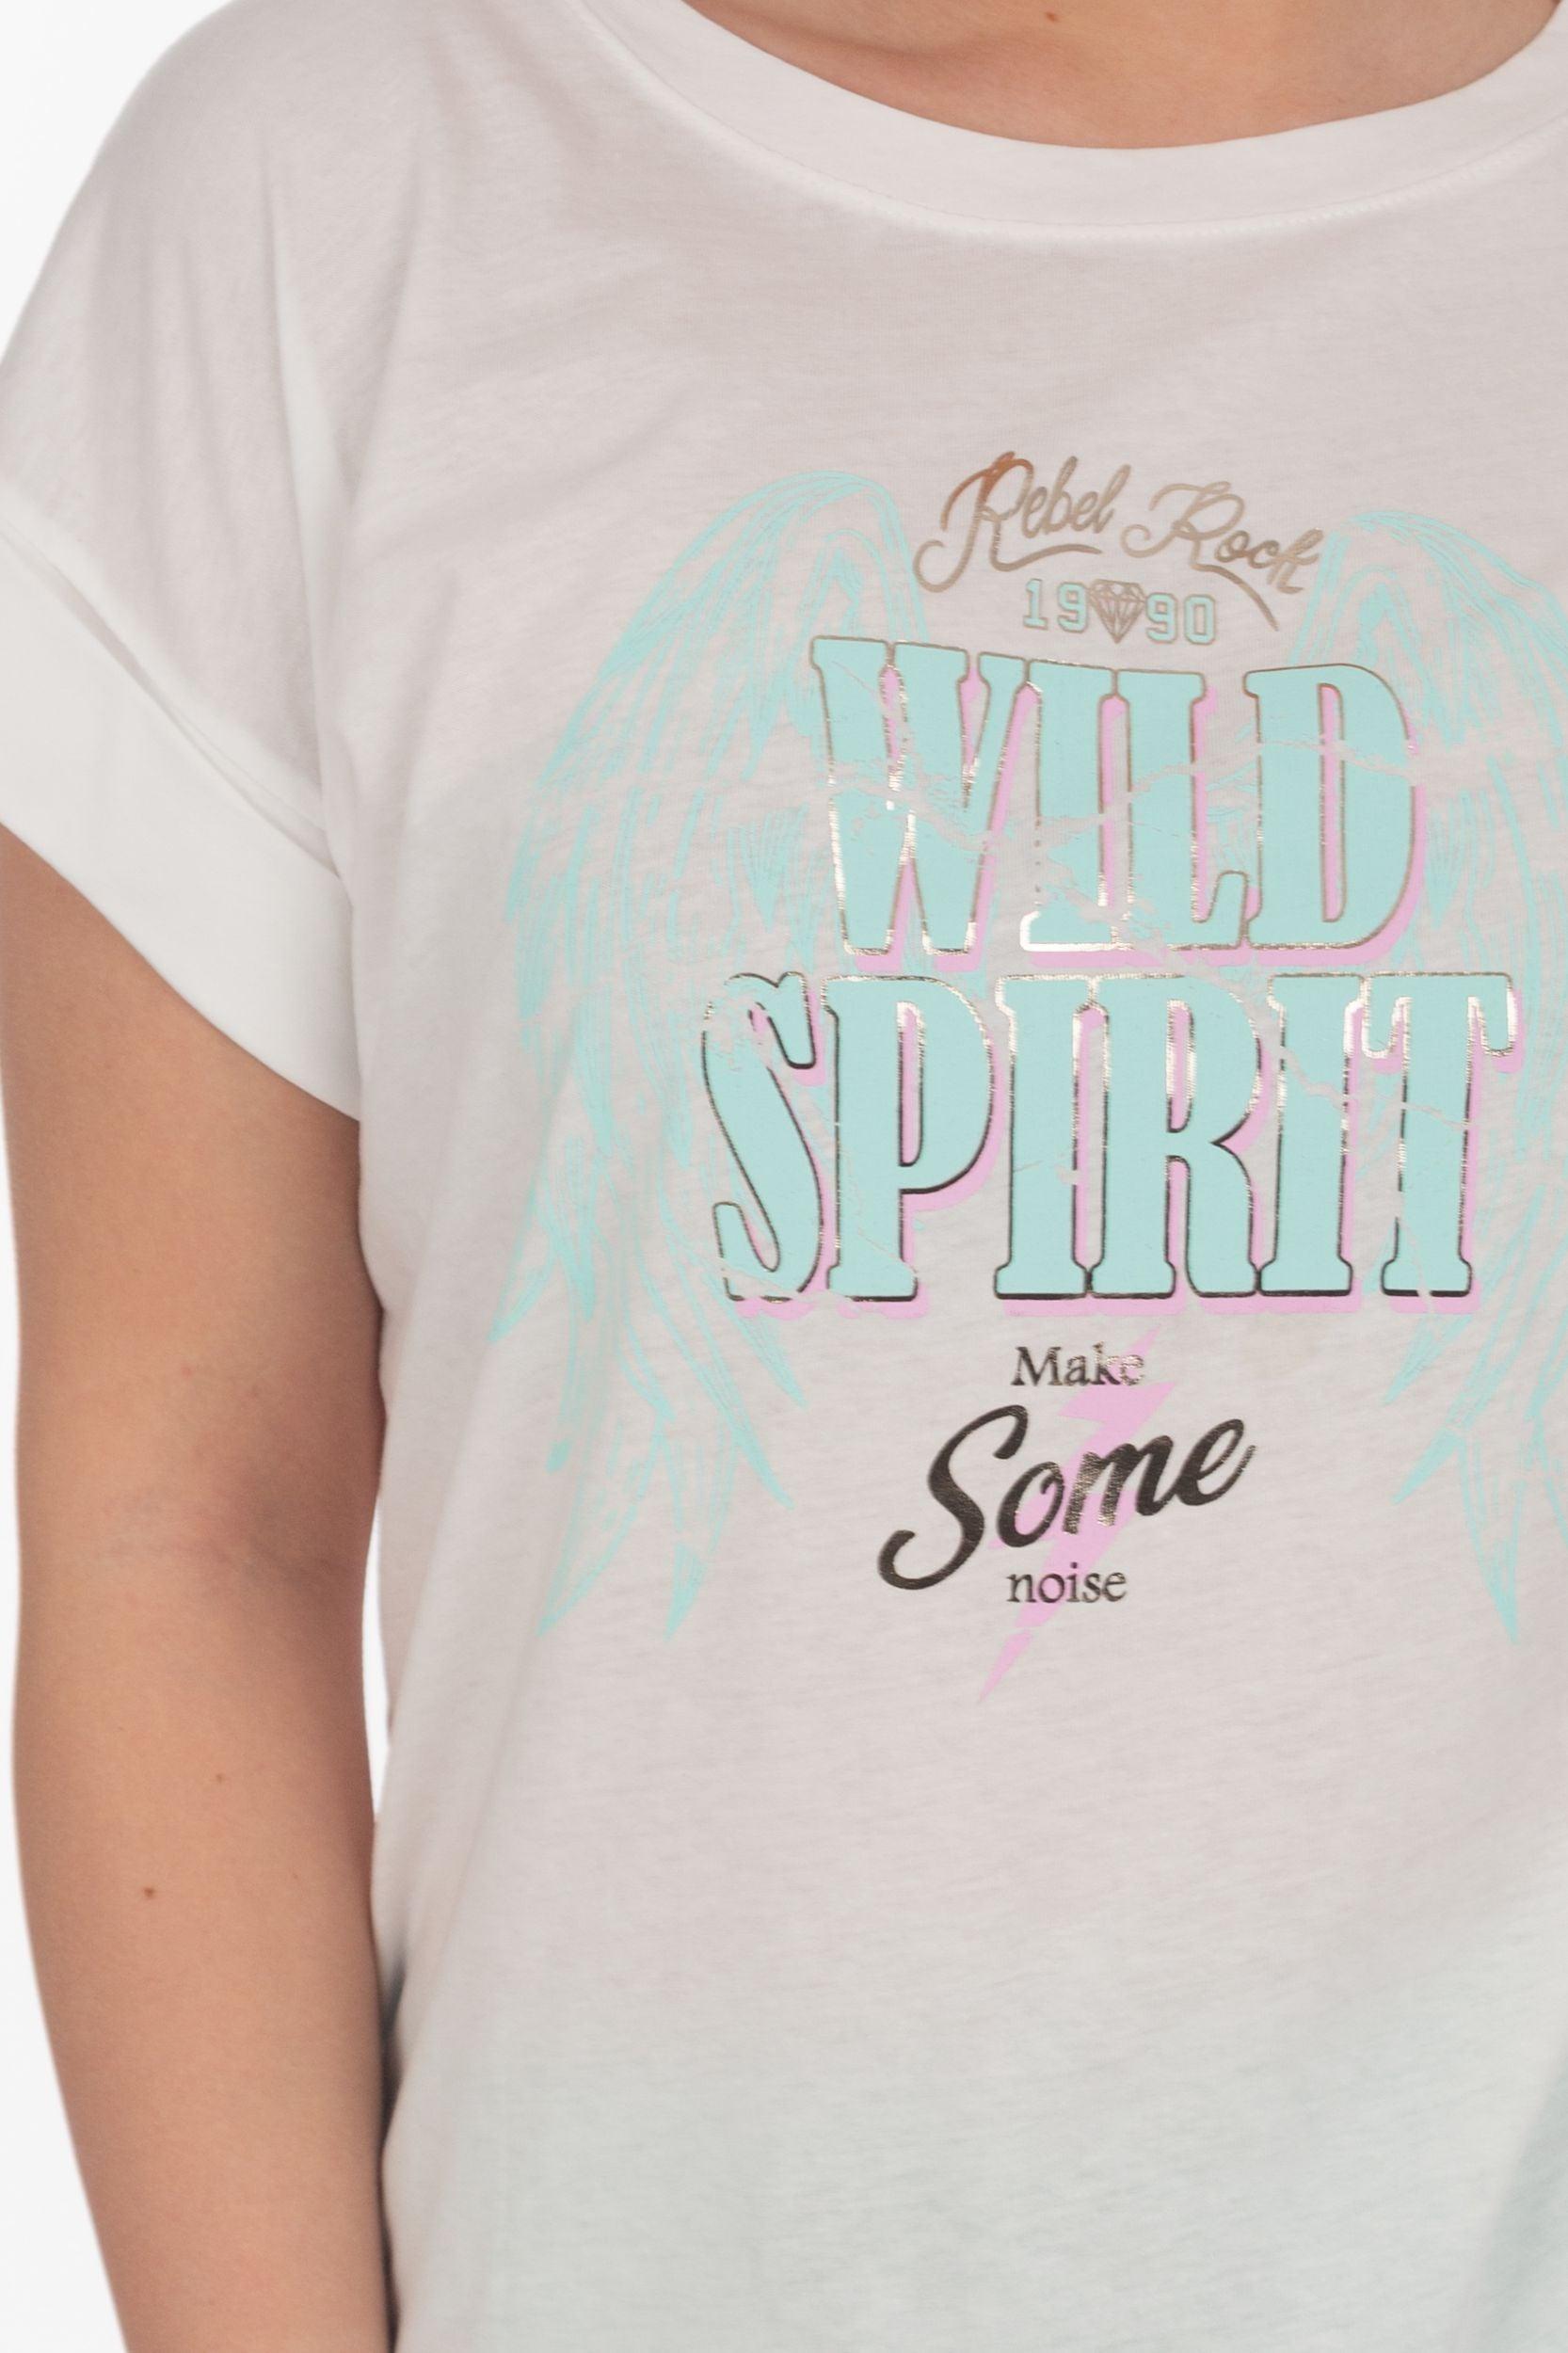 T-Shirt "Wild Spirit" - La Strada